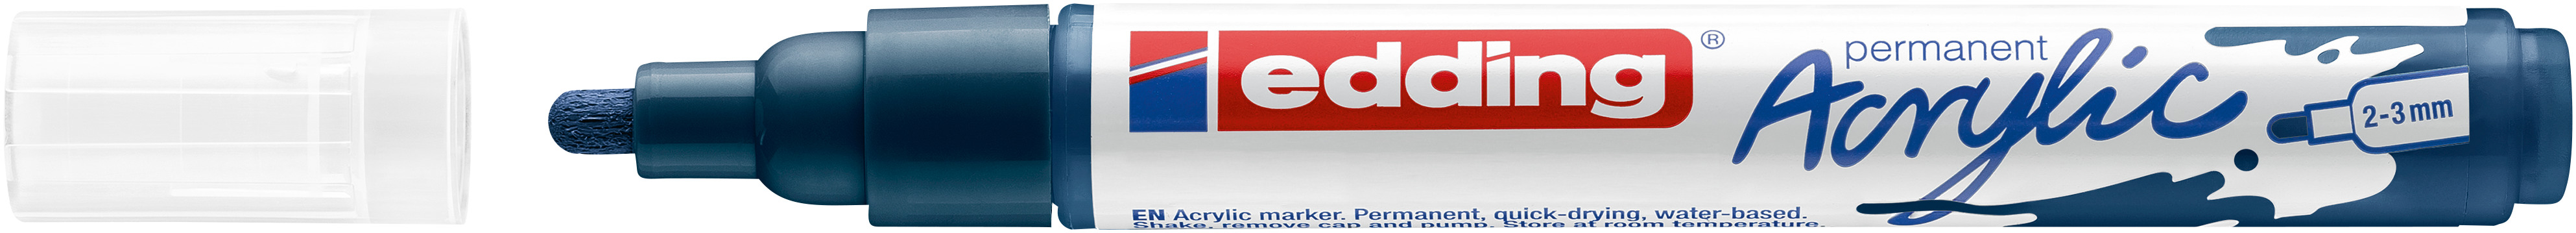 EDDING Acrylmarker 5100 2-3mm 5100-933 elegant midnight